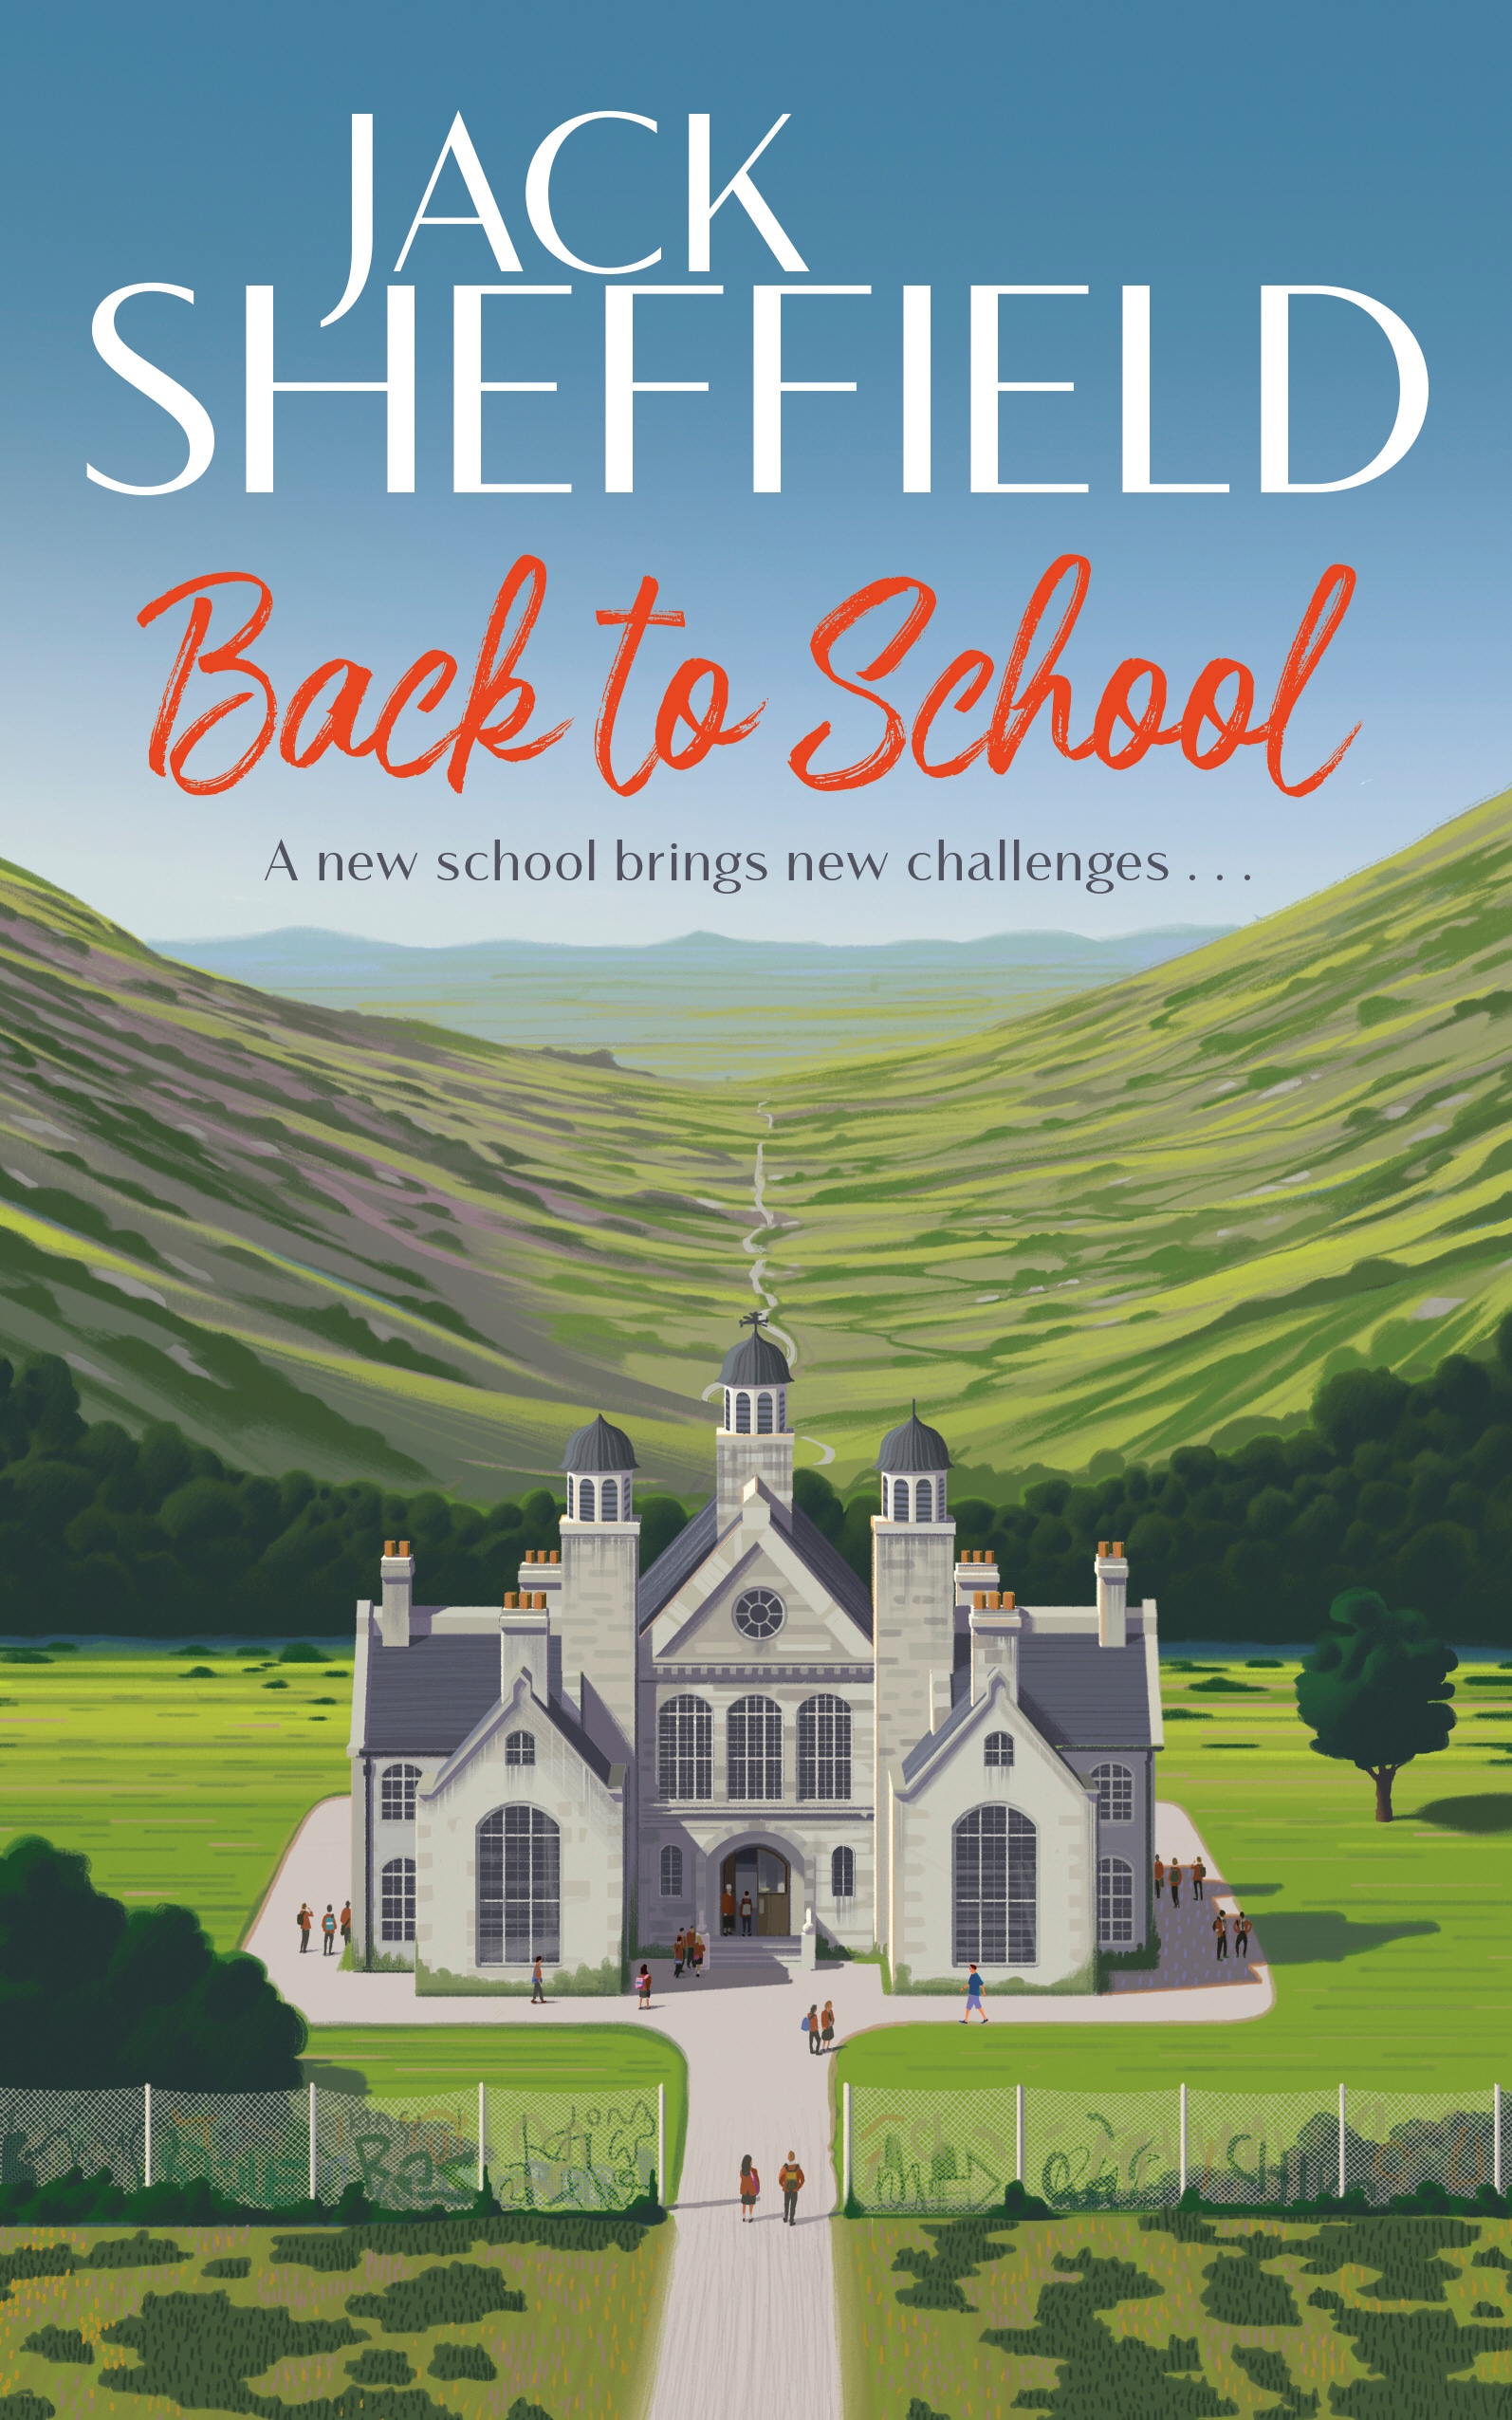 Book “Back to School” by Jack Sheffield — September 3, 2020